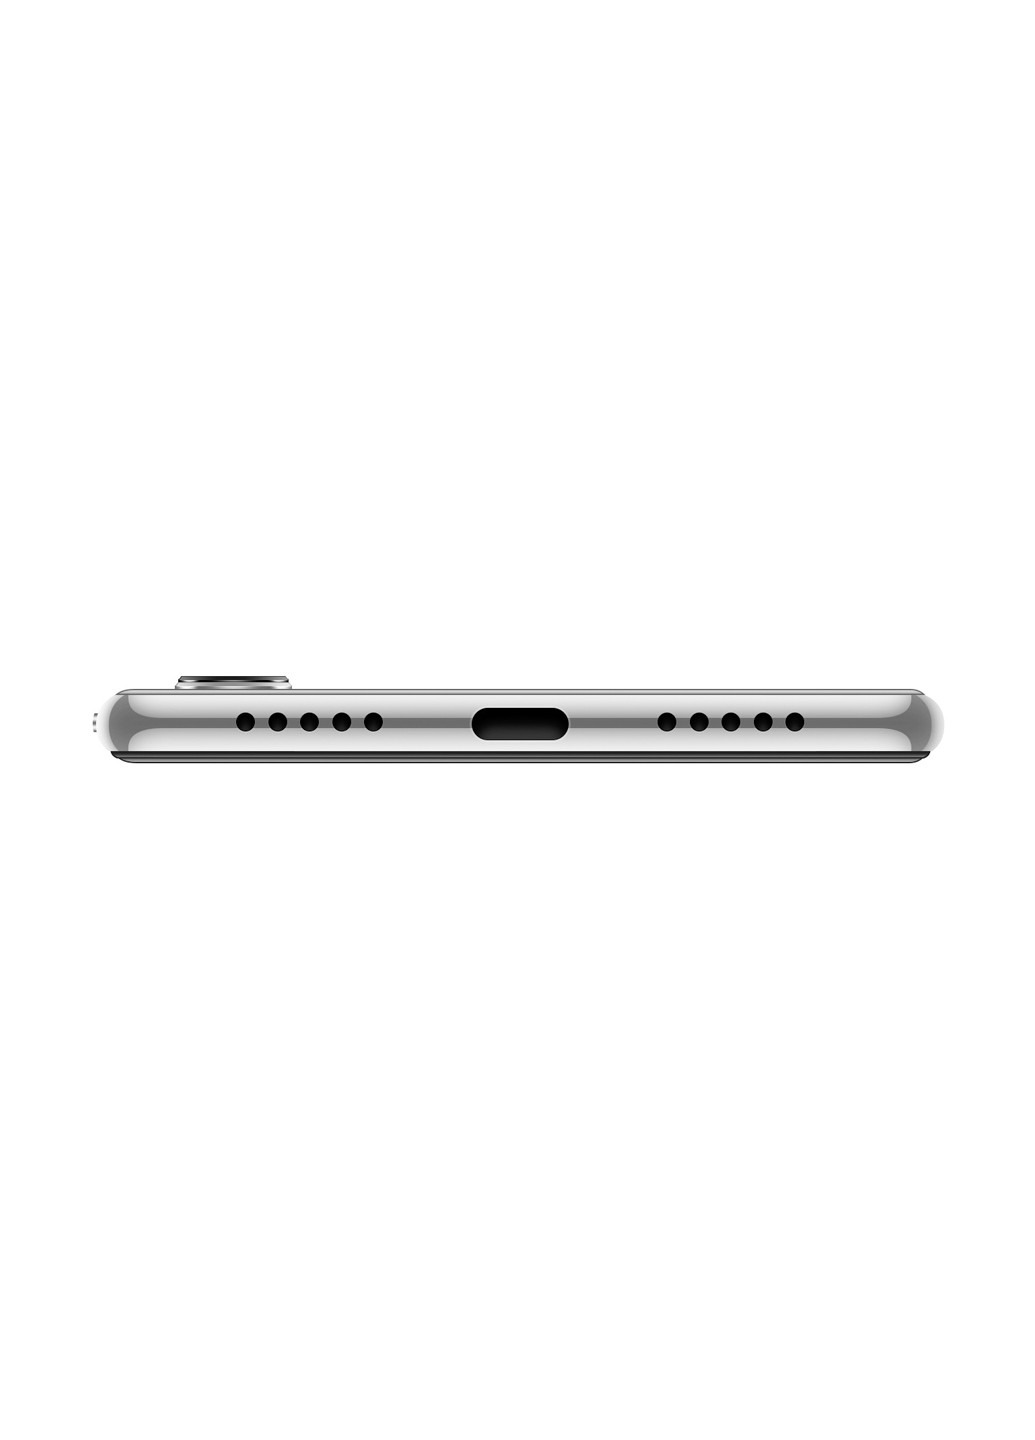 Смартфон Redmi Note 7 4 / 64GB Moonlight White Xiaomi redmi note 7 4/64gb moonlight white (141898325)